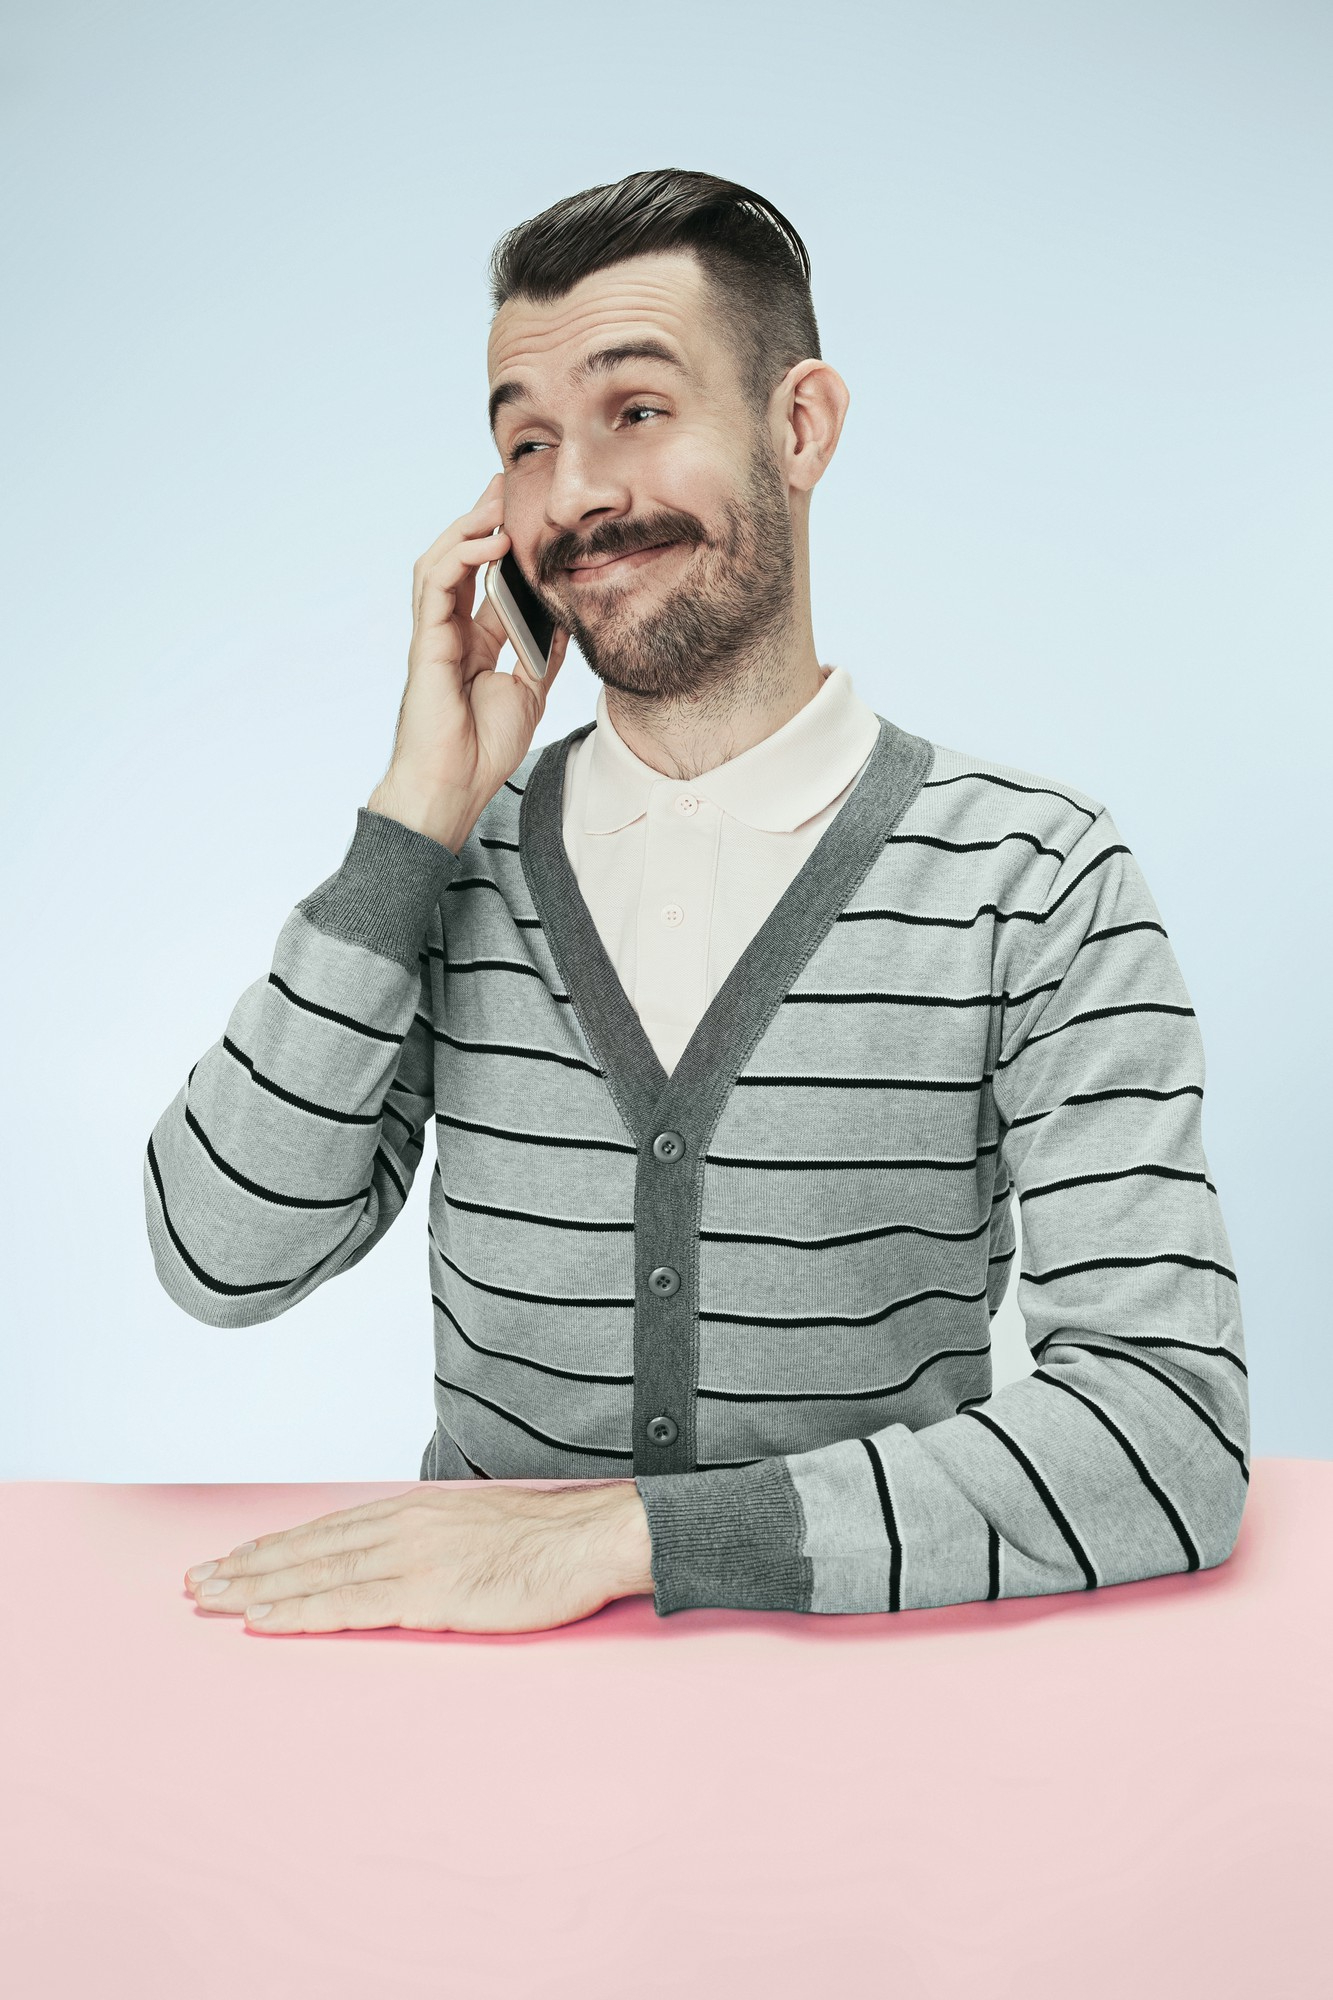 A happy man talking on a phone | Source: Freepik